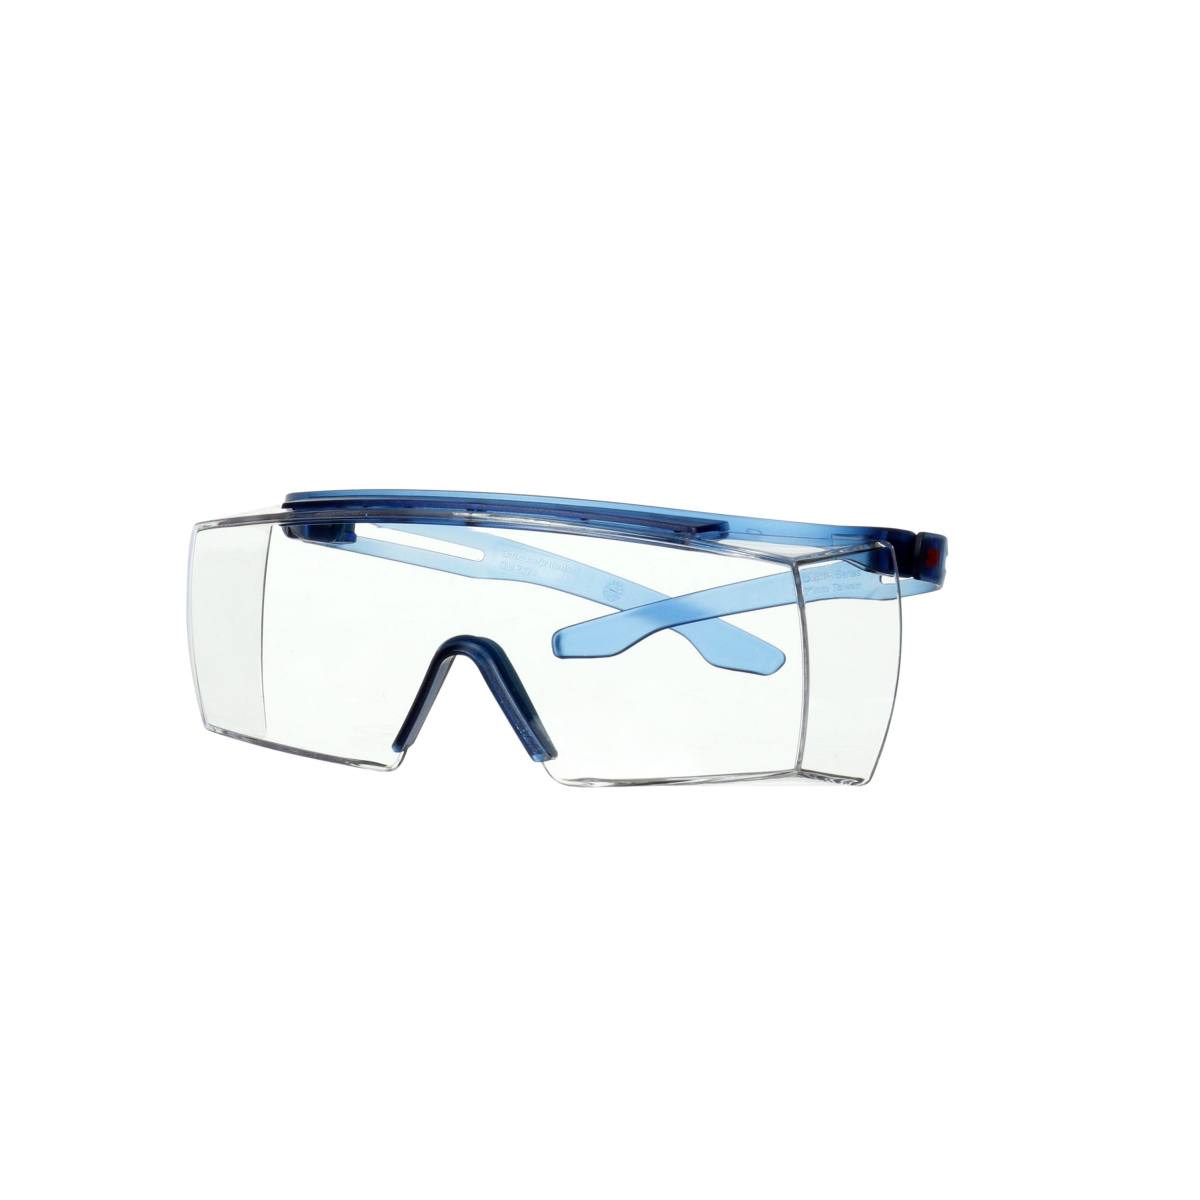 3M SecureFit 3700 over spectacles, blue temples, scratch-resistant+ (K), clear lens, angle-adjustable, SF3701ASP-BLU-EU